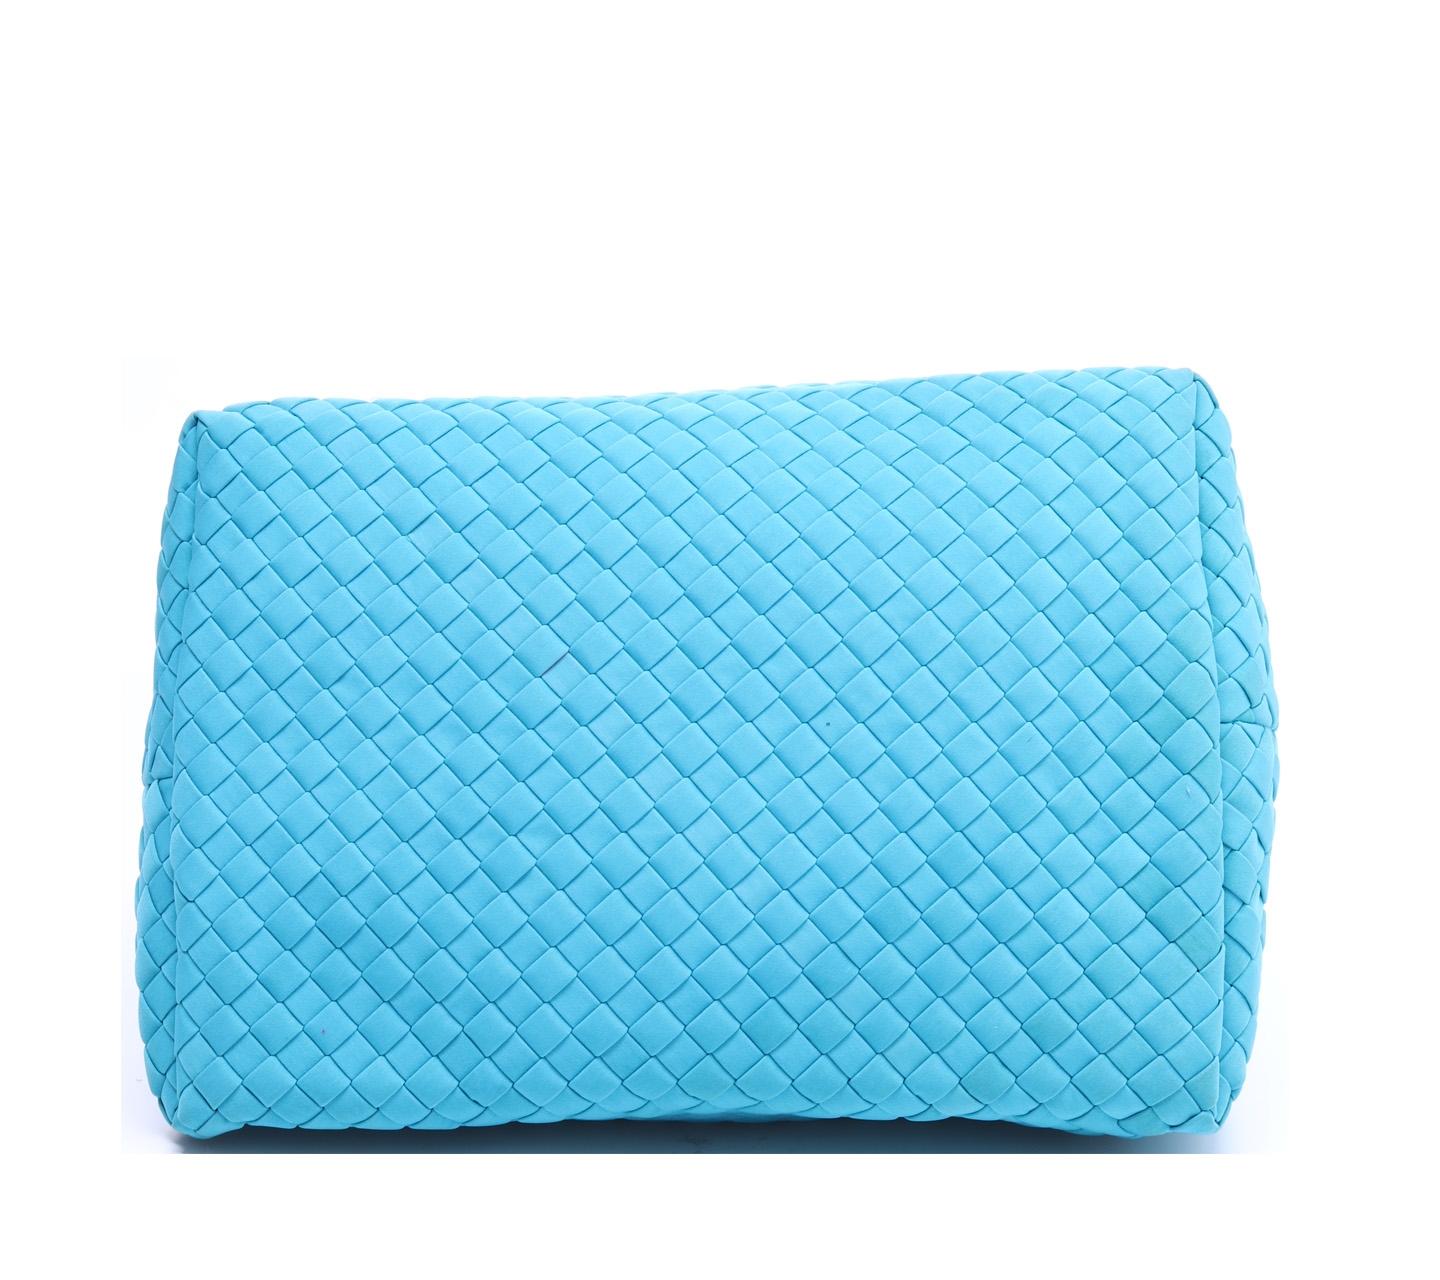 Webe Blue Handbag